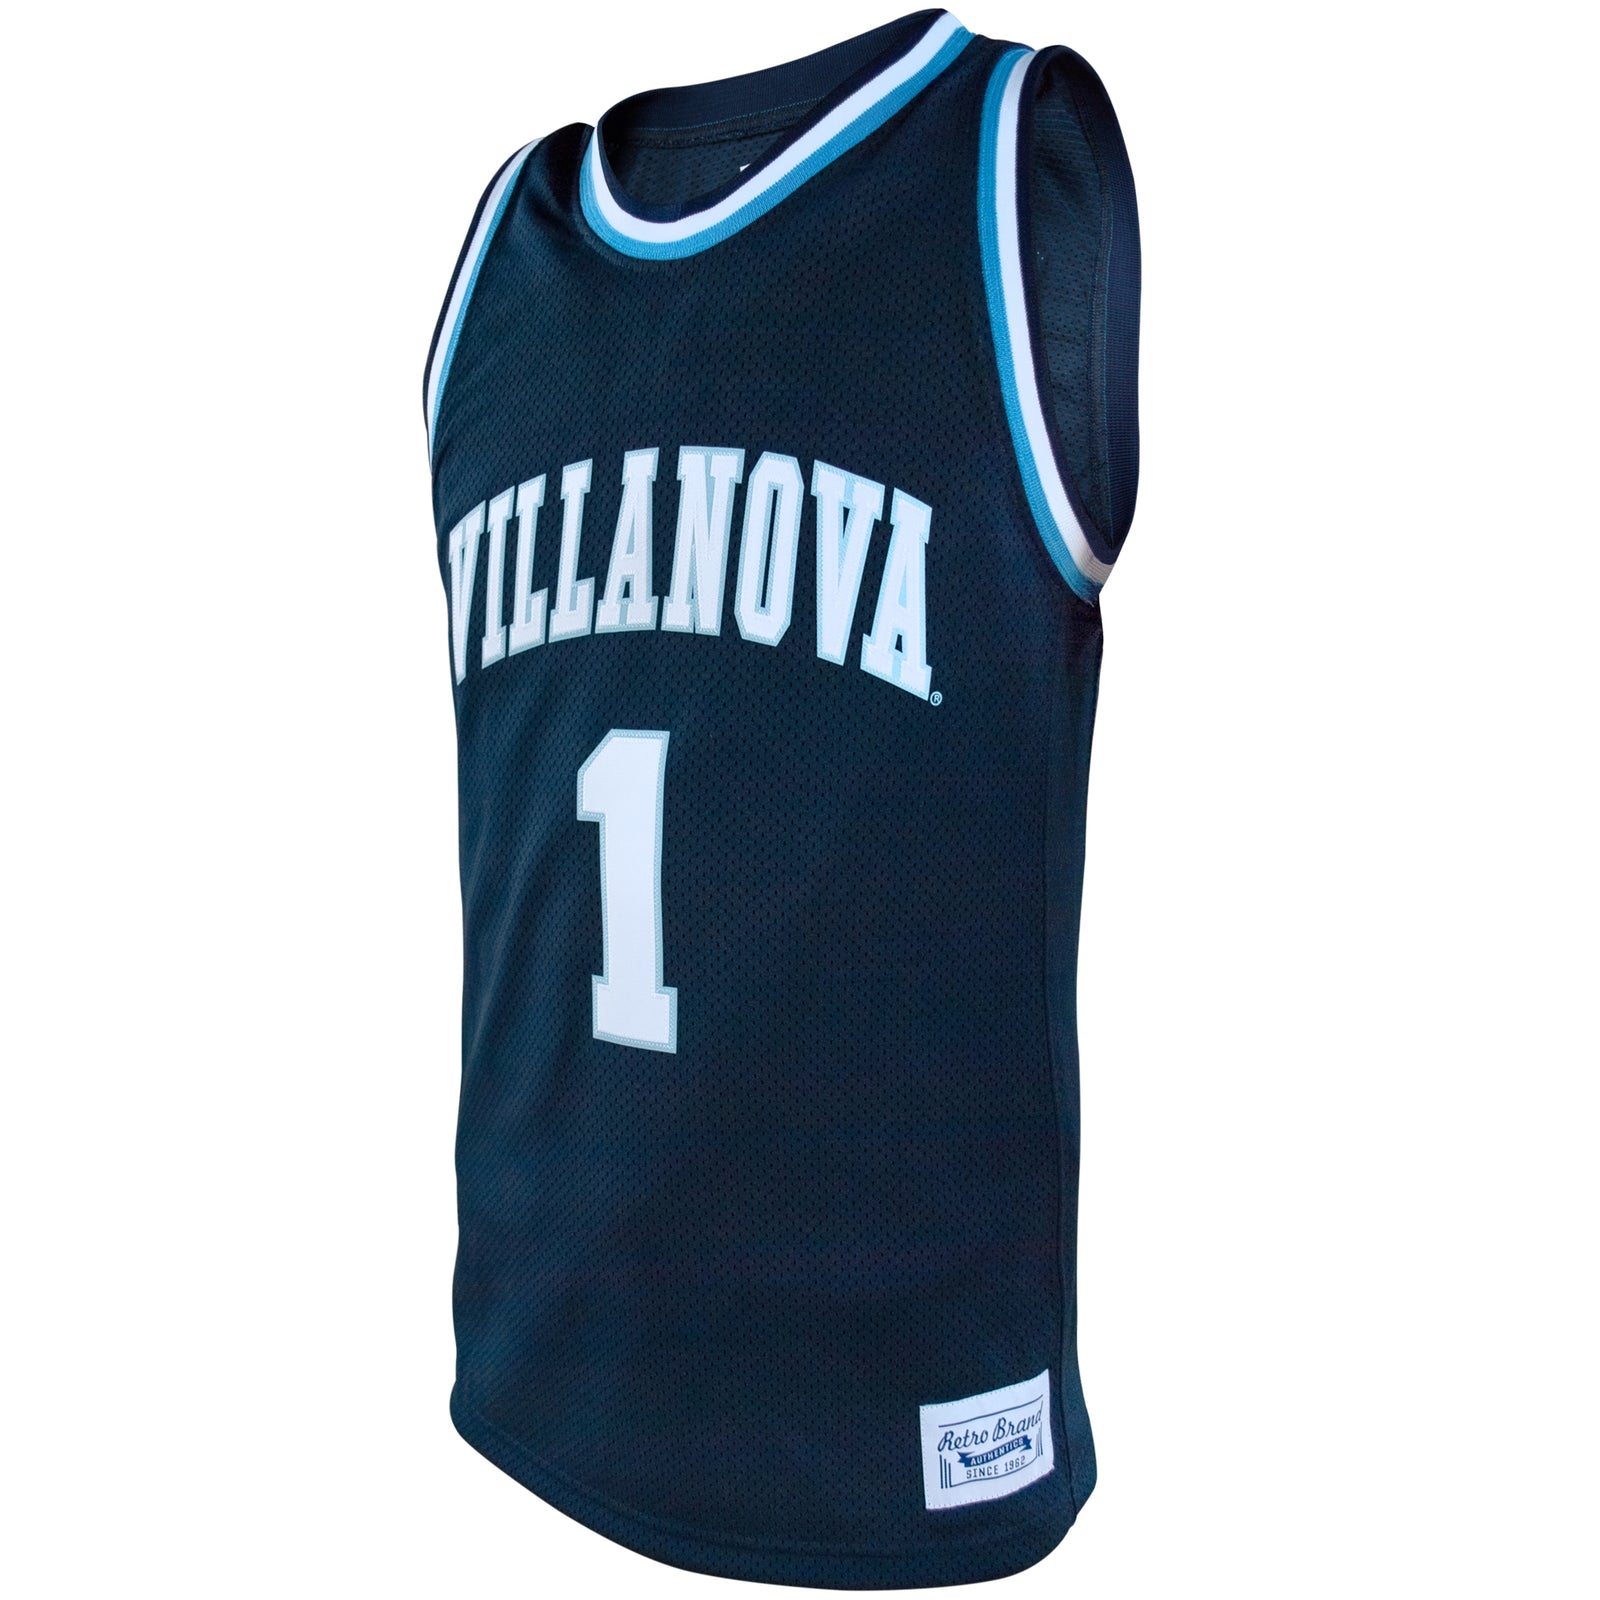 Villanova Wildcats Kyle Lowry Throwback Jersey